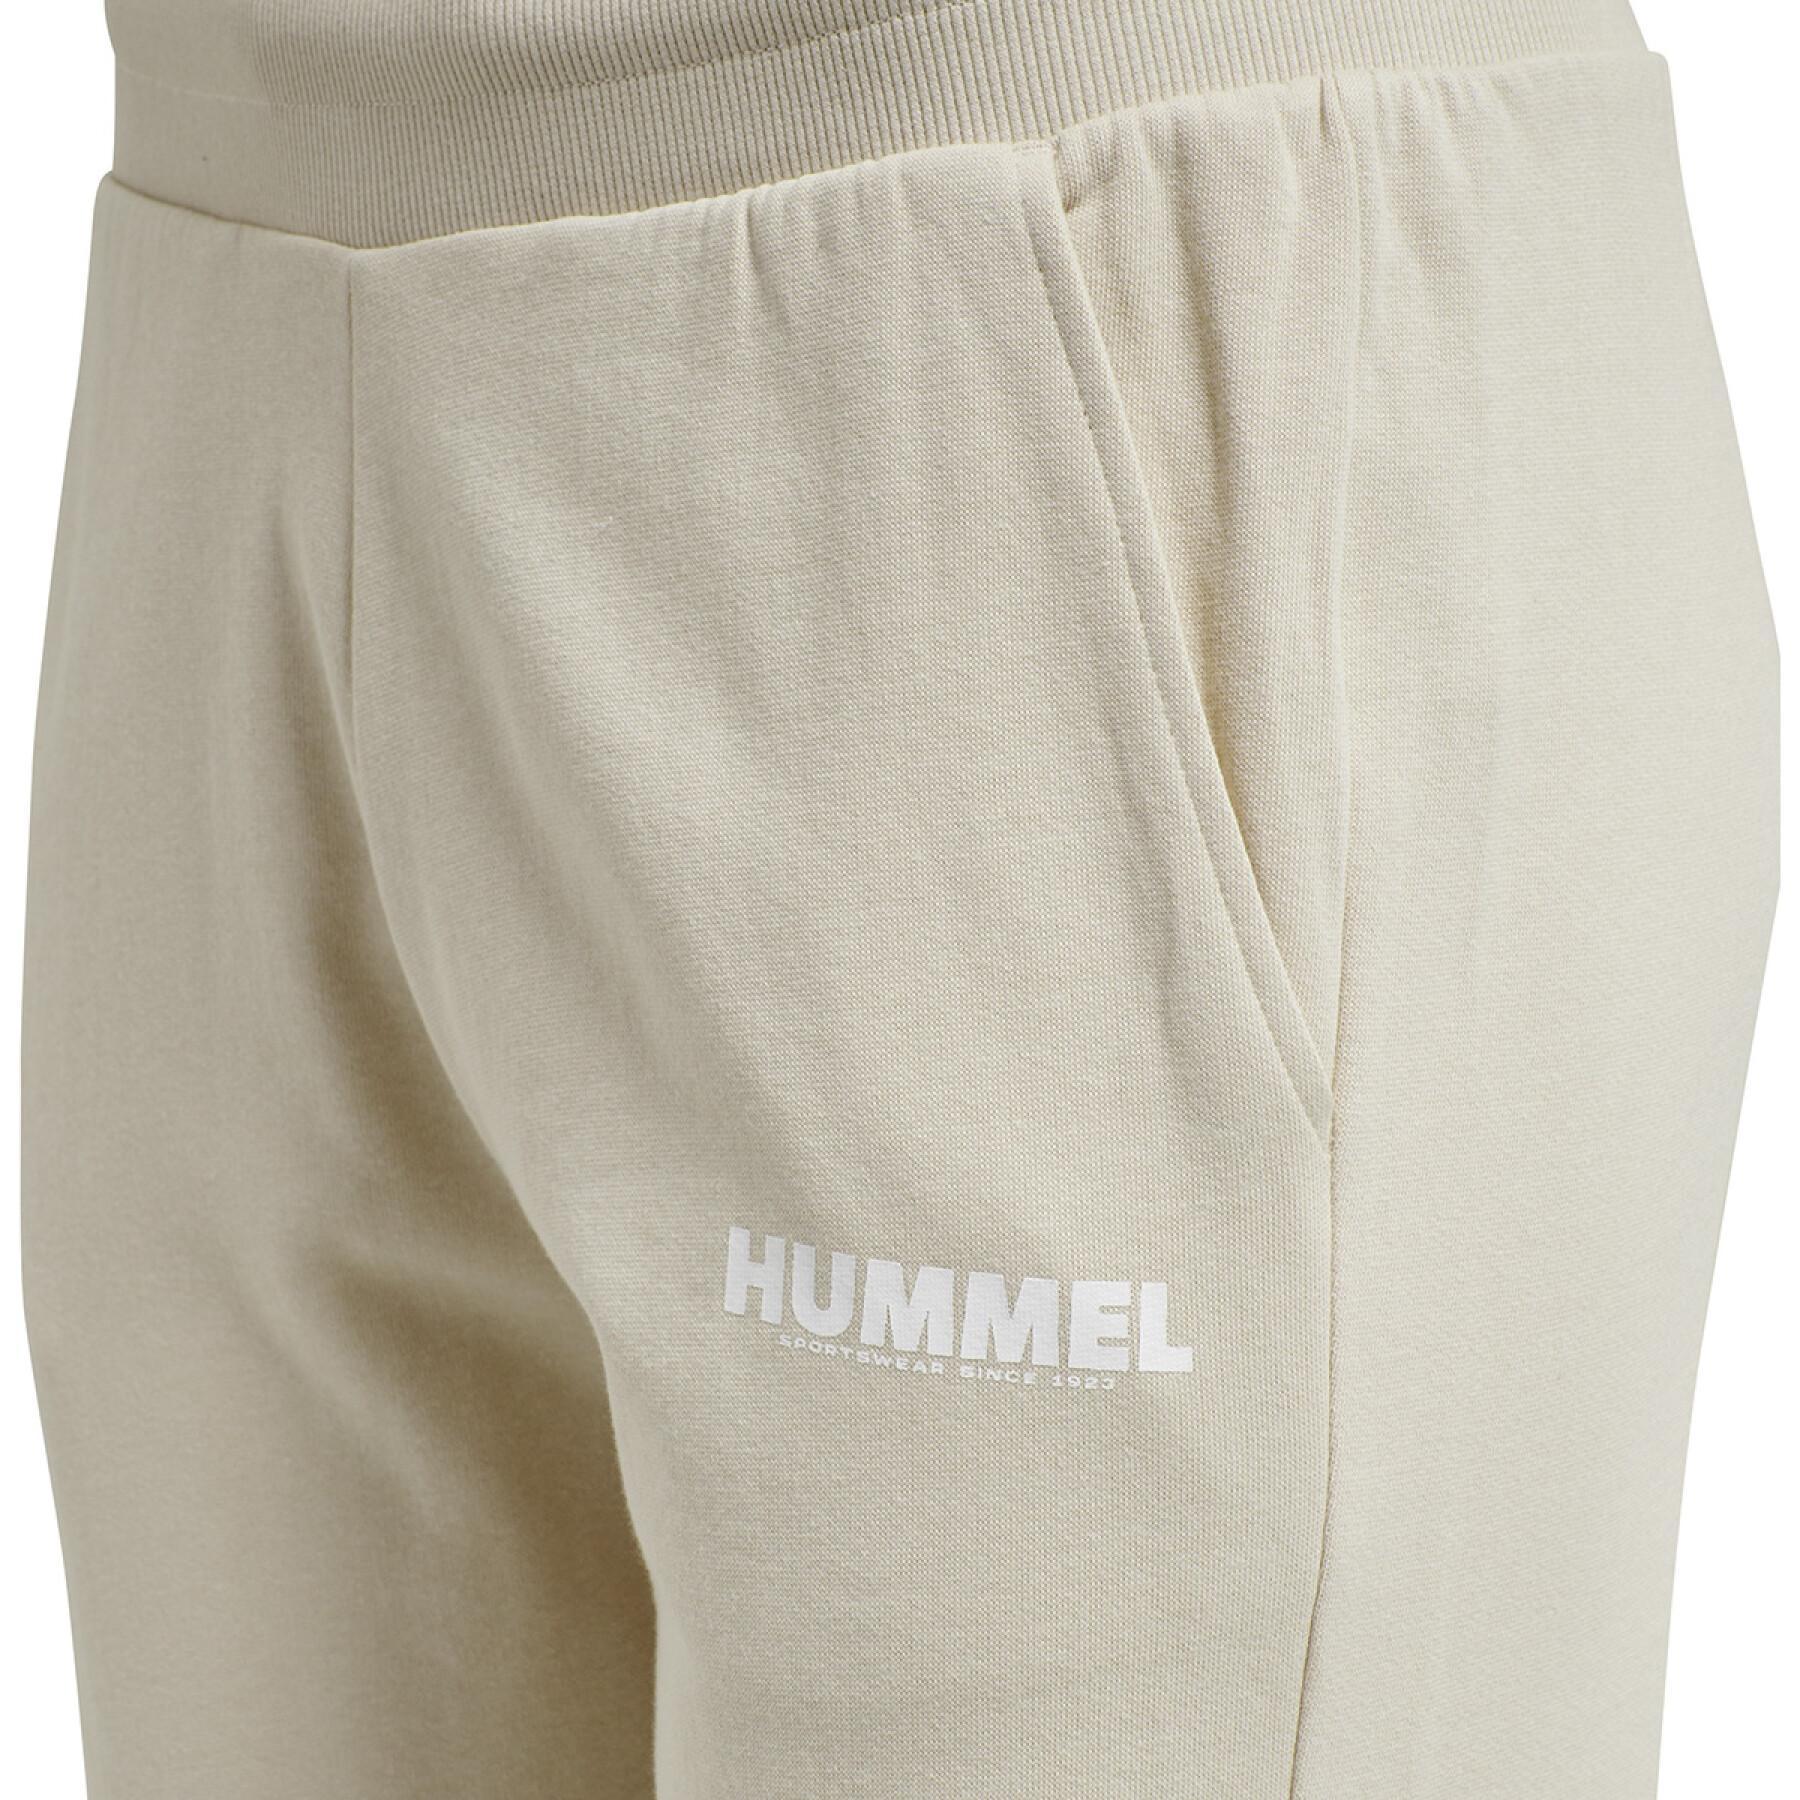 Damski stożkowy kombinezon do joggingu Hummel hmlLegacy